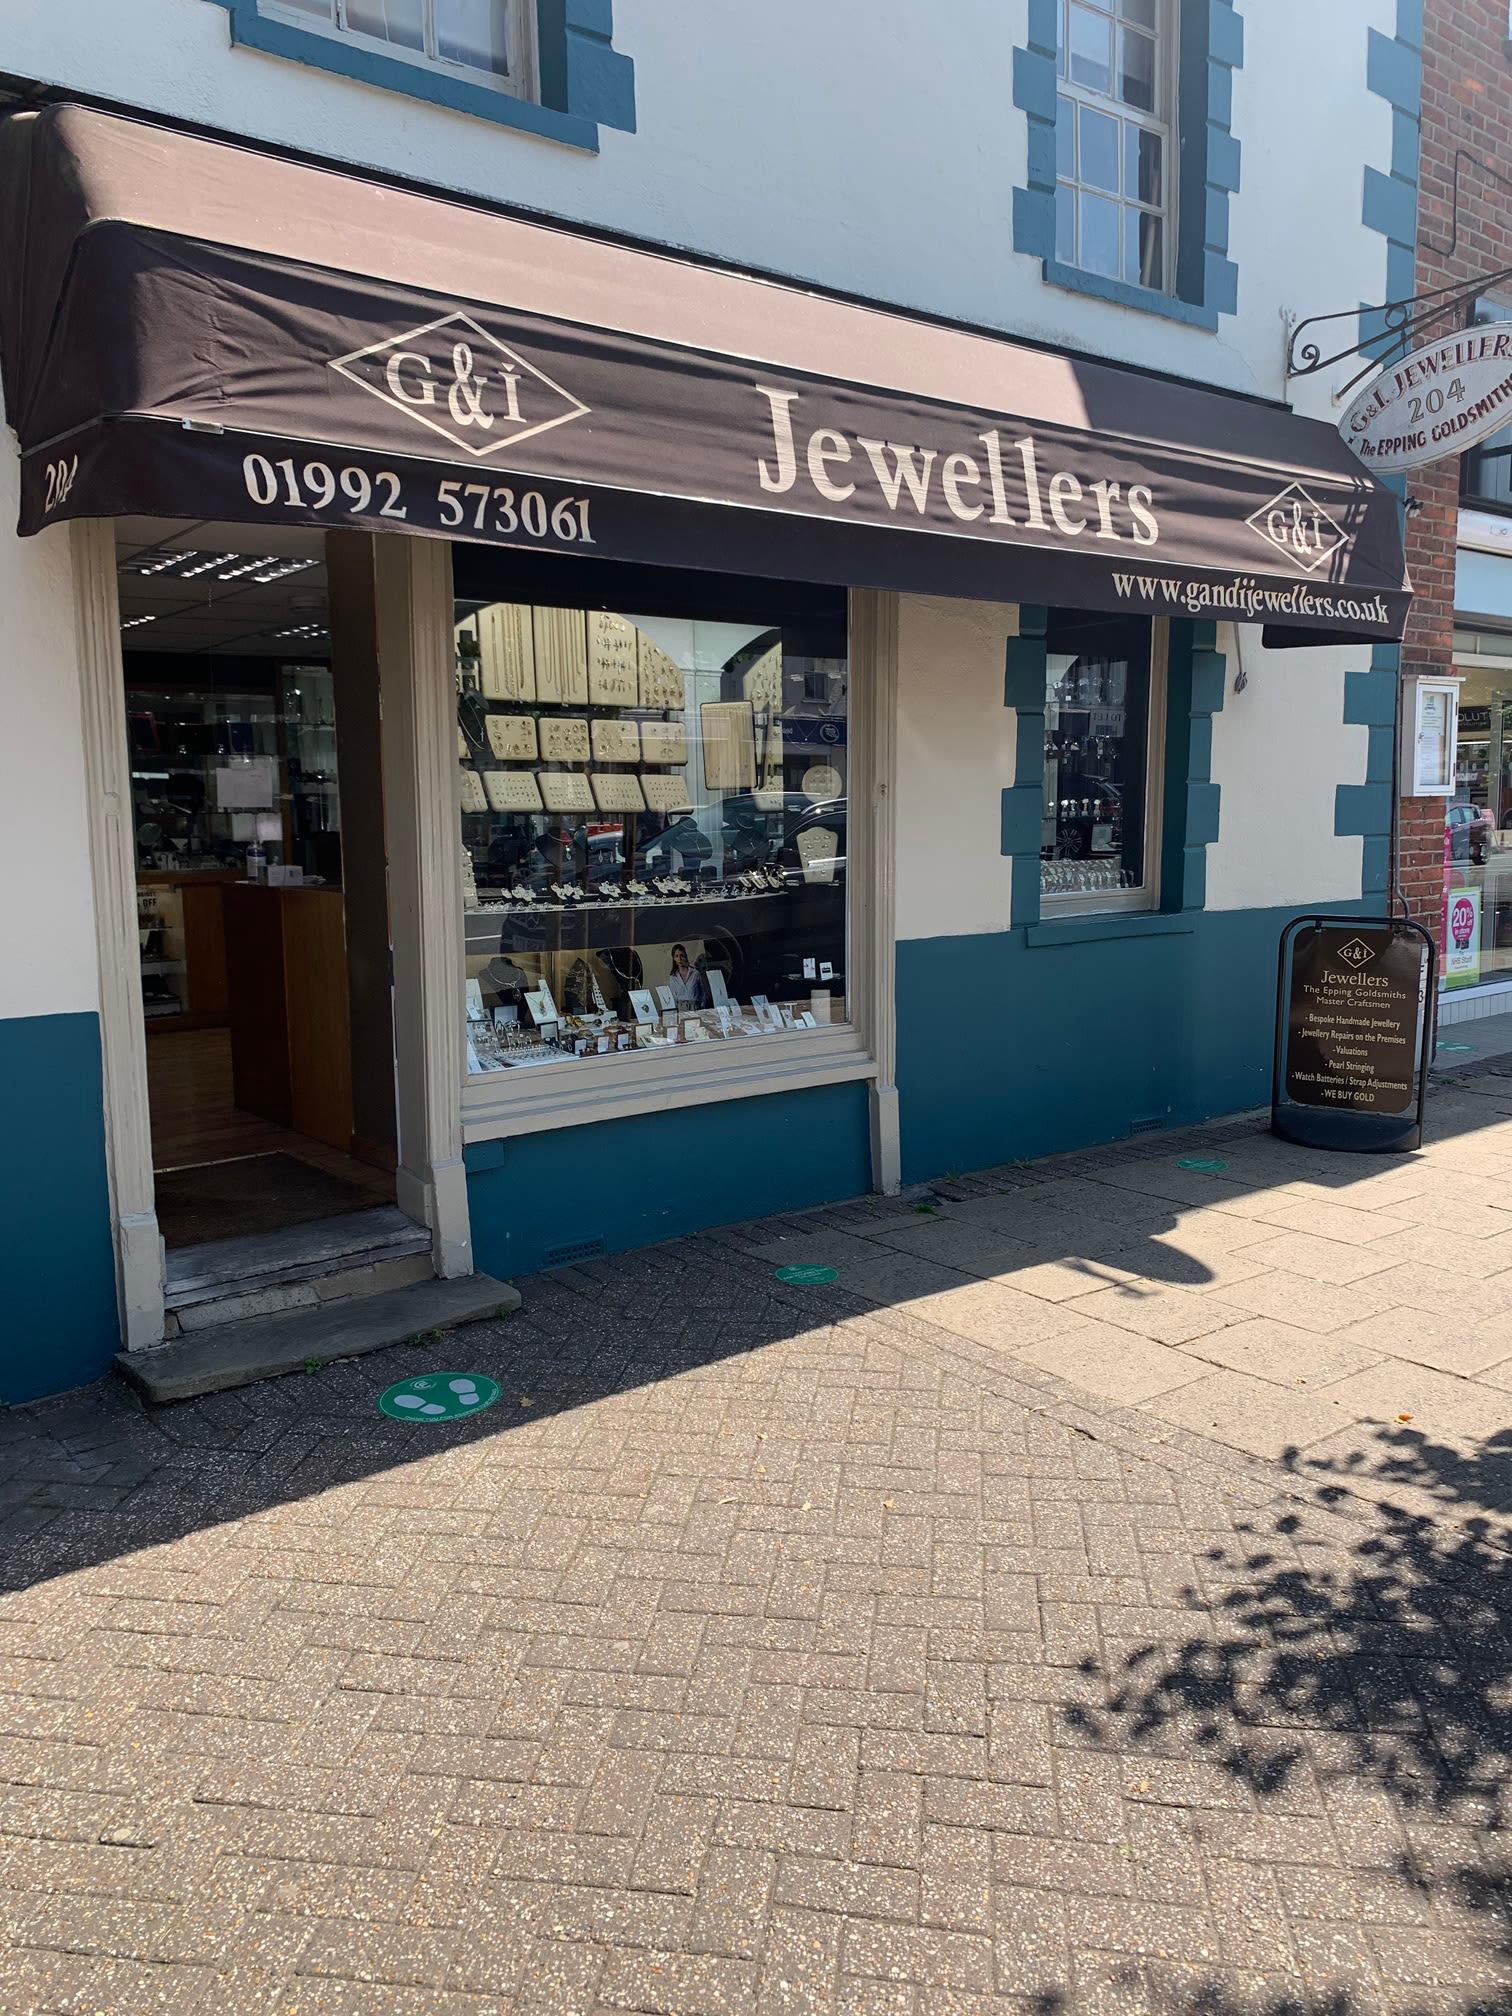 G & I Jewellers Epping 01992 573061